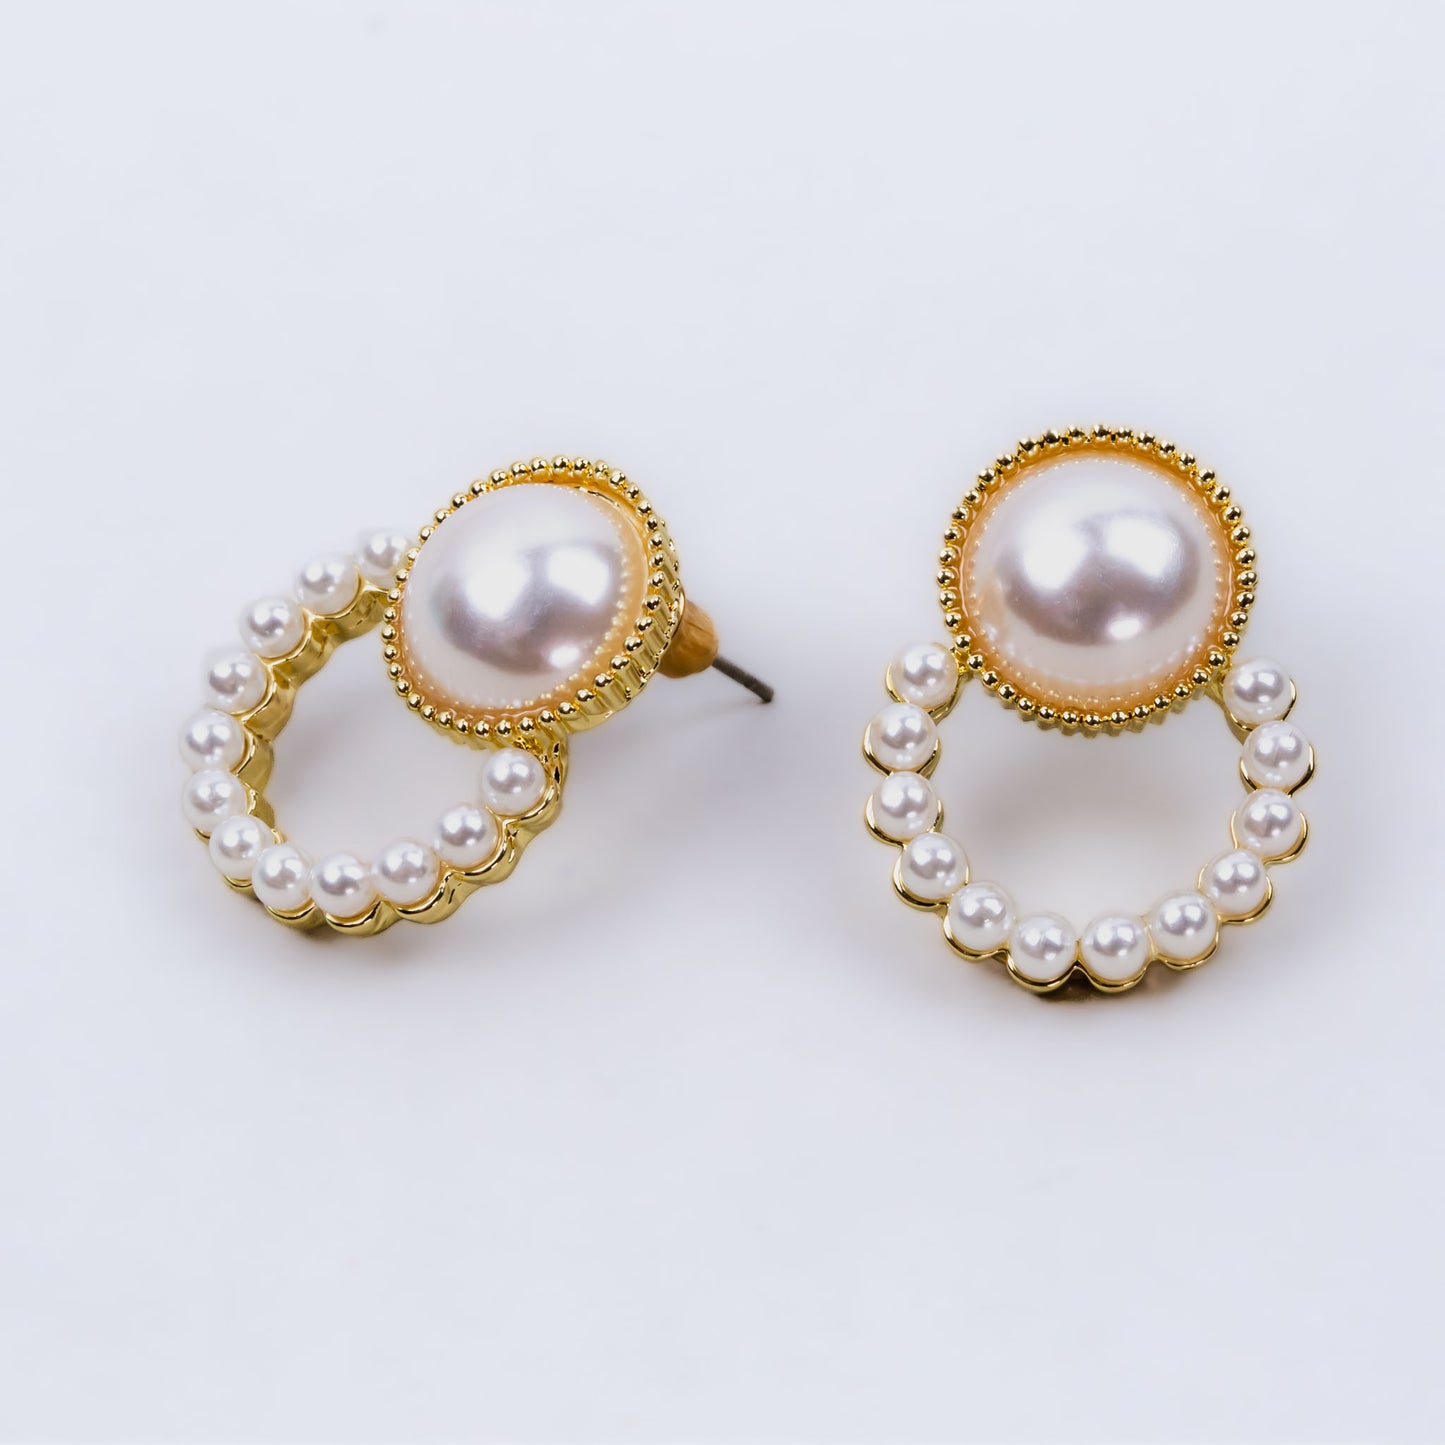 Cercei în stil clasic cu perle albe